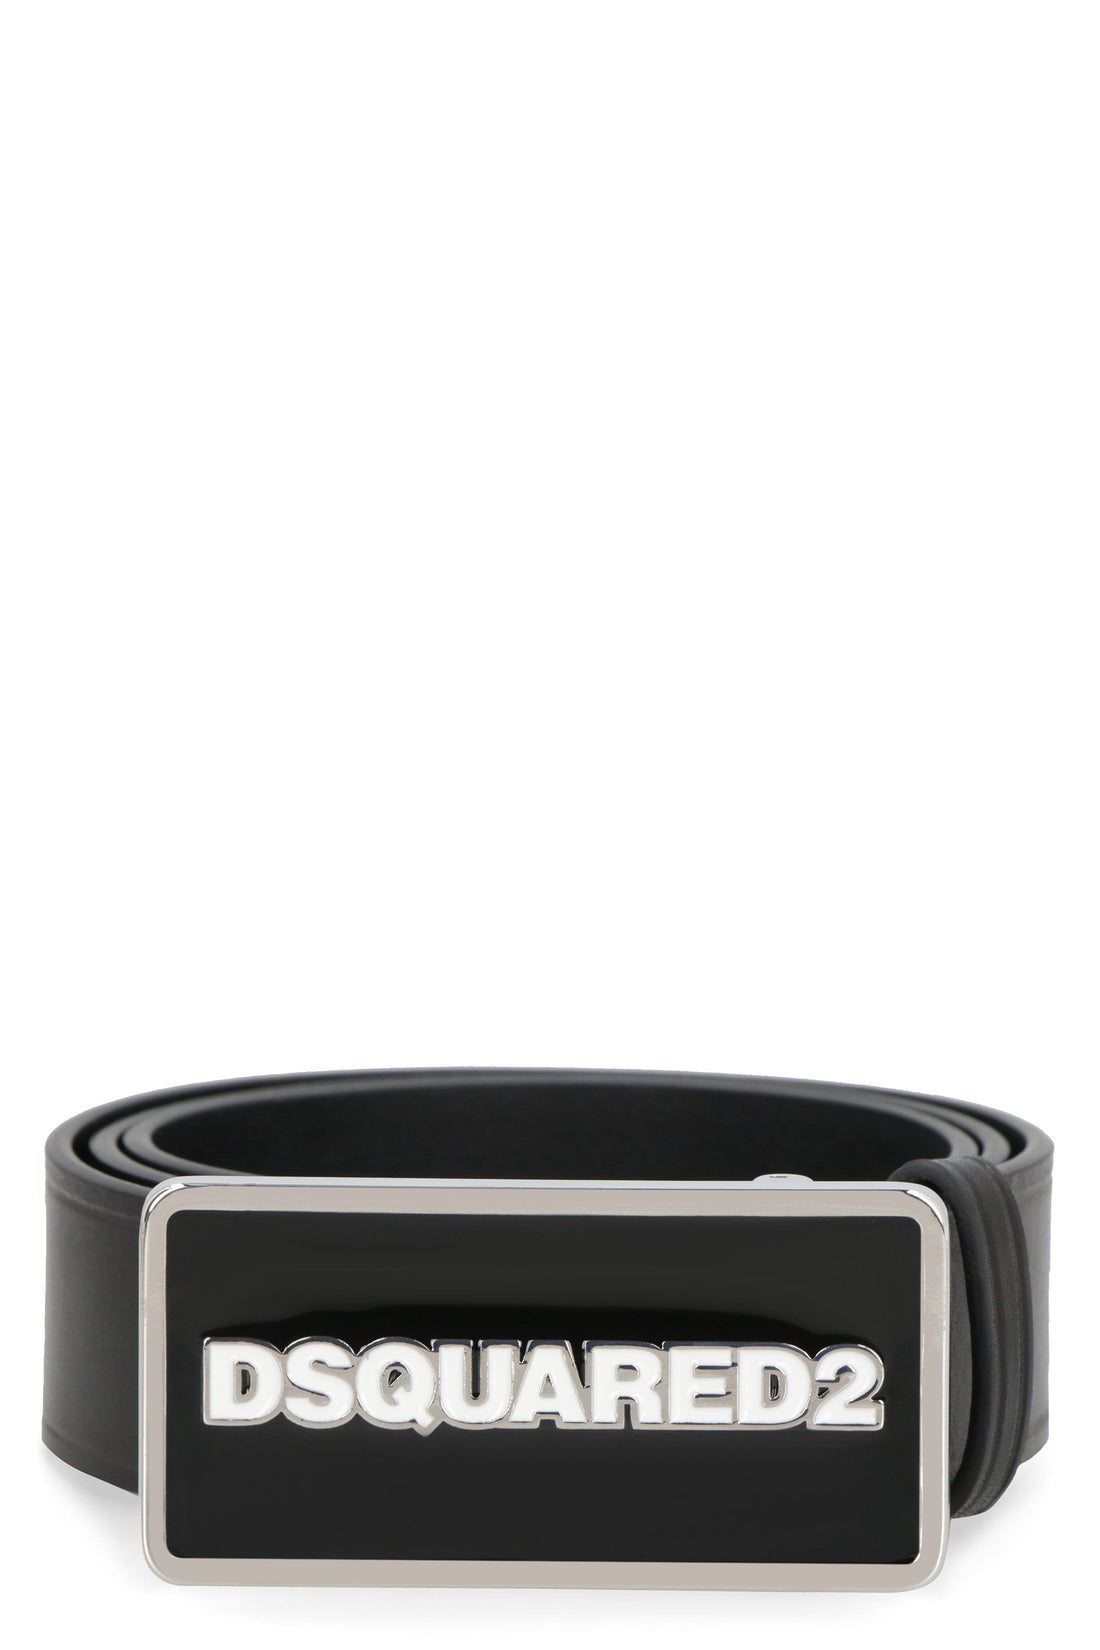 Dsquared2-OUTLET-SALE-Logo buckle leather belt-ARCHIVIST